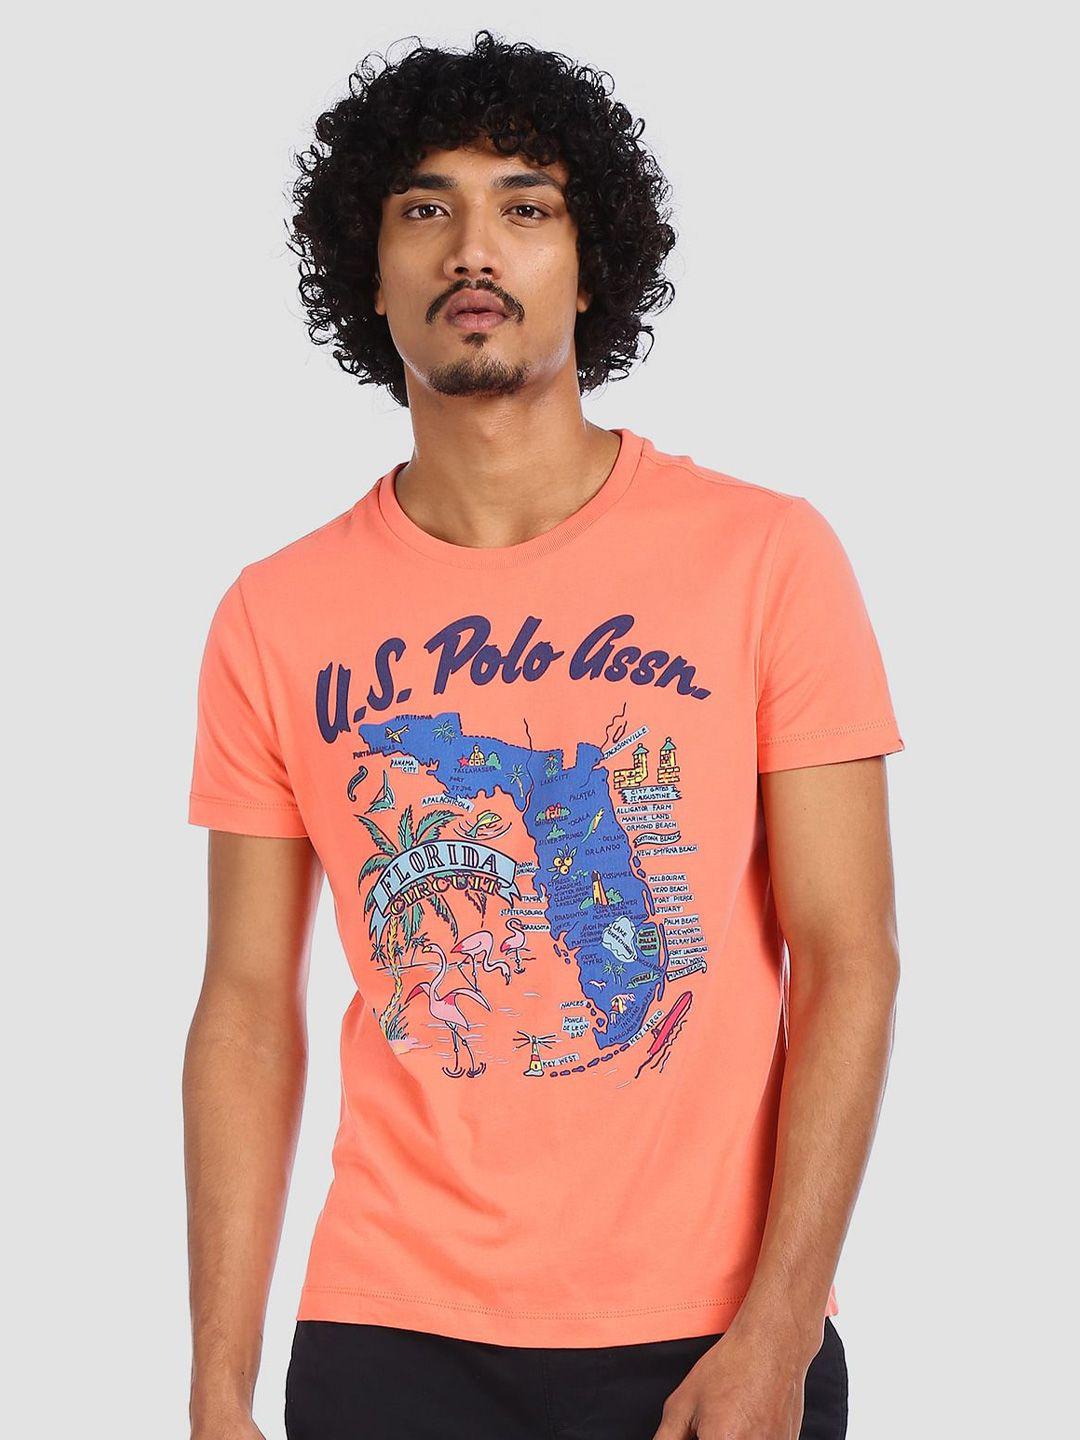 u.s. polo assn. denim co. men coral pink printed slim fit round neck pure cotton t-shirt